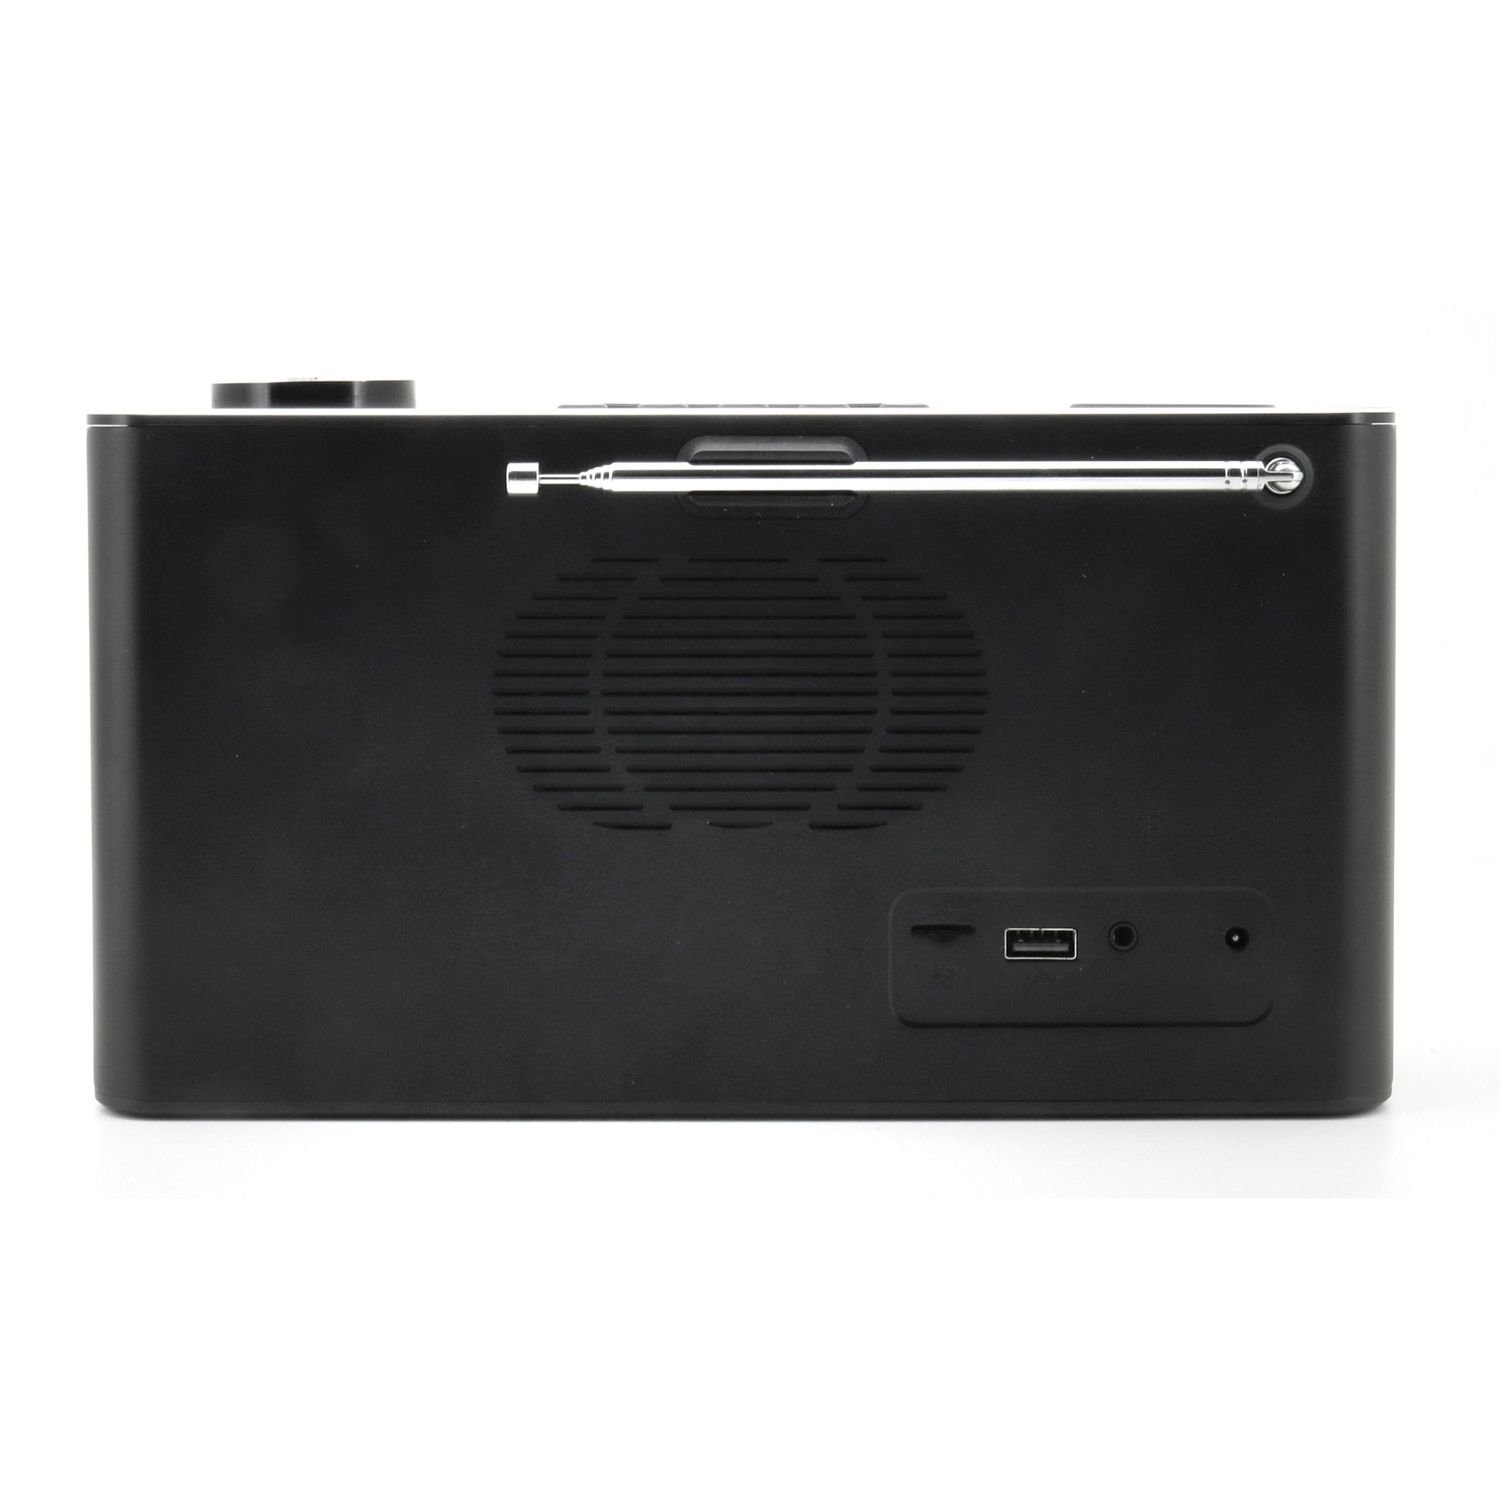 DAB700SW DAB+ SD W Boombox Streaming Radio Soundmaster USB tragbares Boombox 2x6 Bluetooth